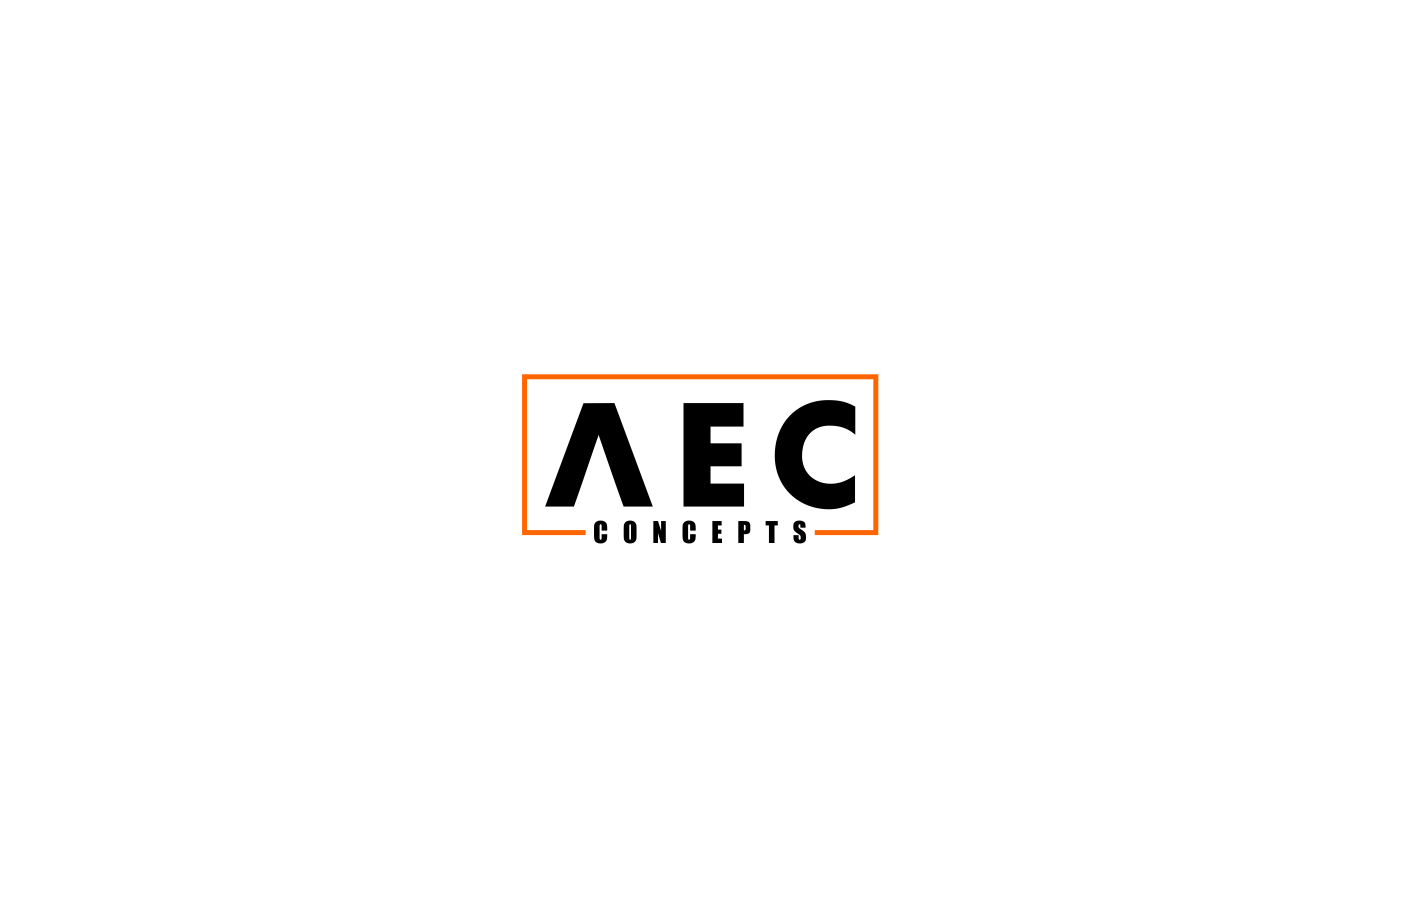 AEC Logo - Modern, Elegant, Business Logo Design for AEC Concepts